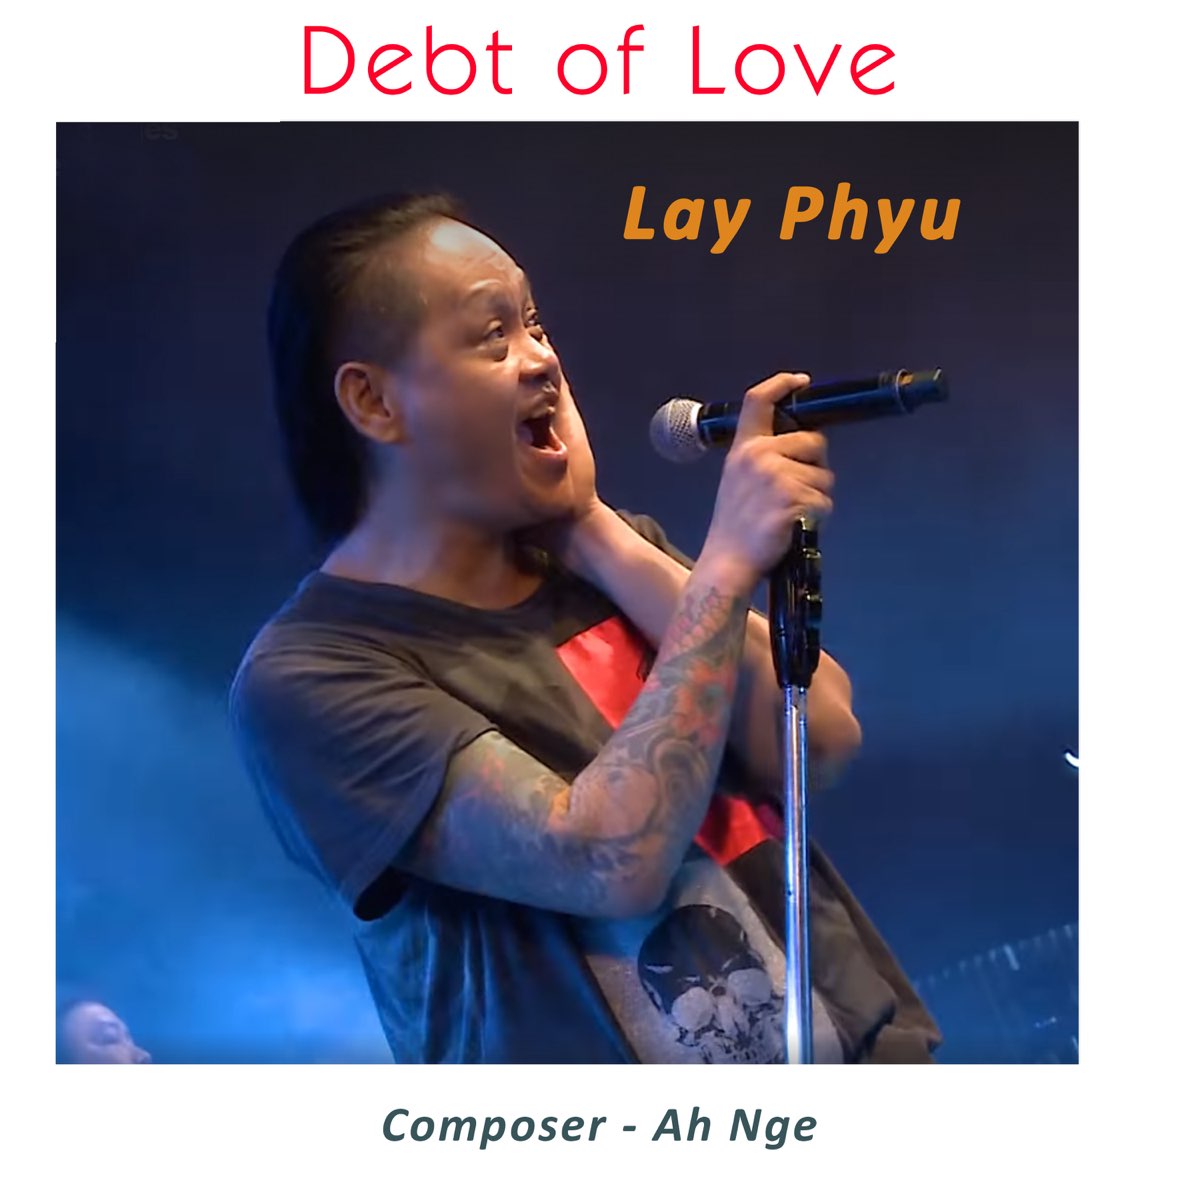 lay phyu album cover